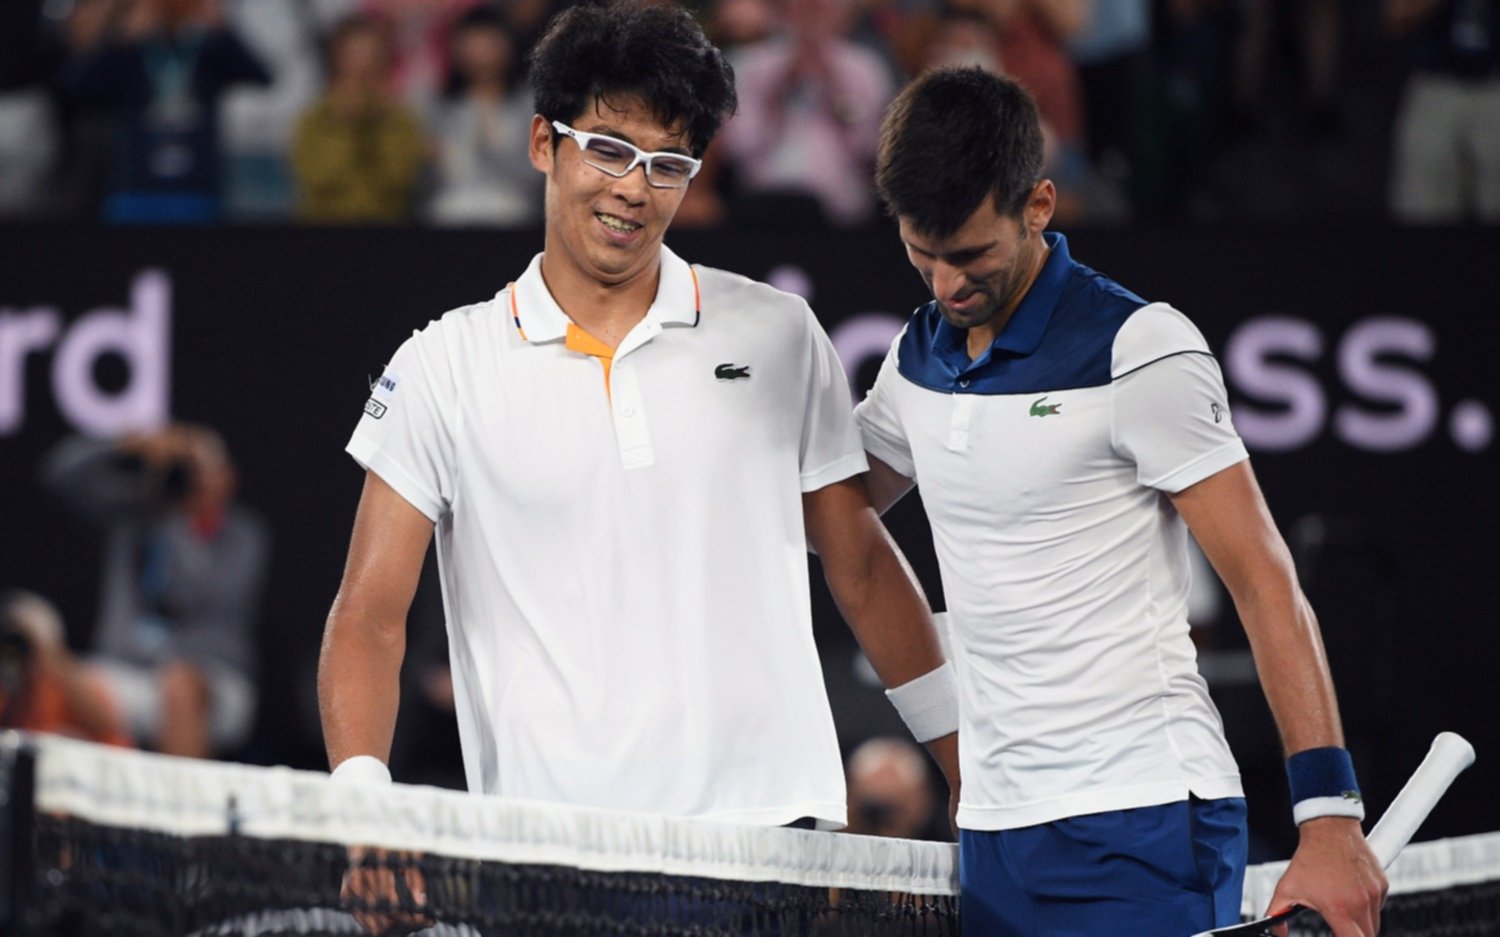 Abierto de Australia: surcoreano da batacazo al  eliminar a Djokovic y Federer pasa a cuartos